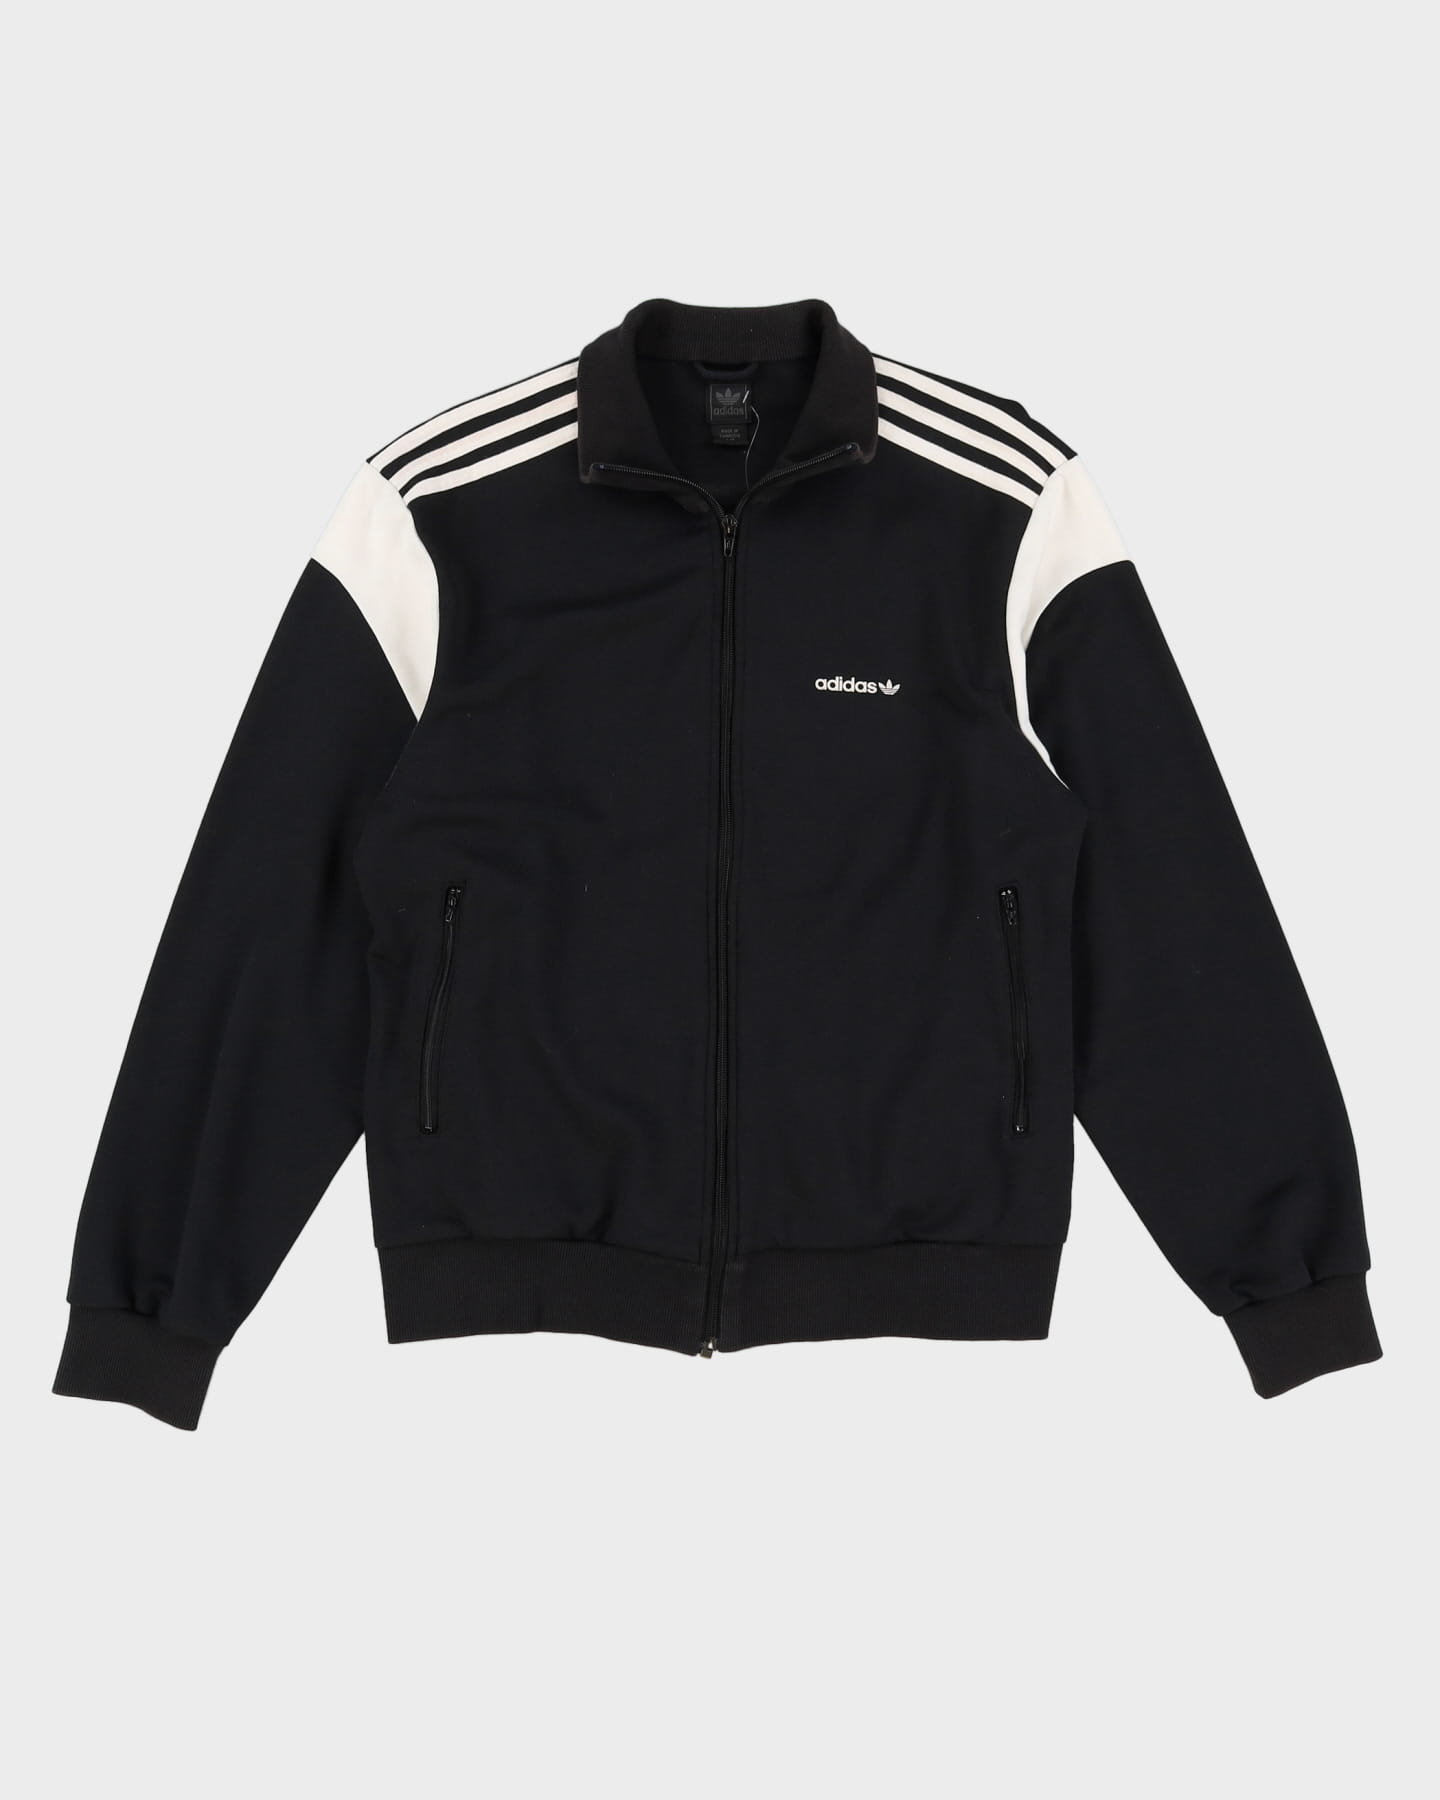 Adidas Black / White Track Jacket - L